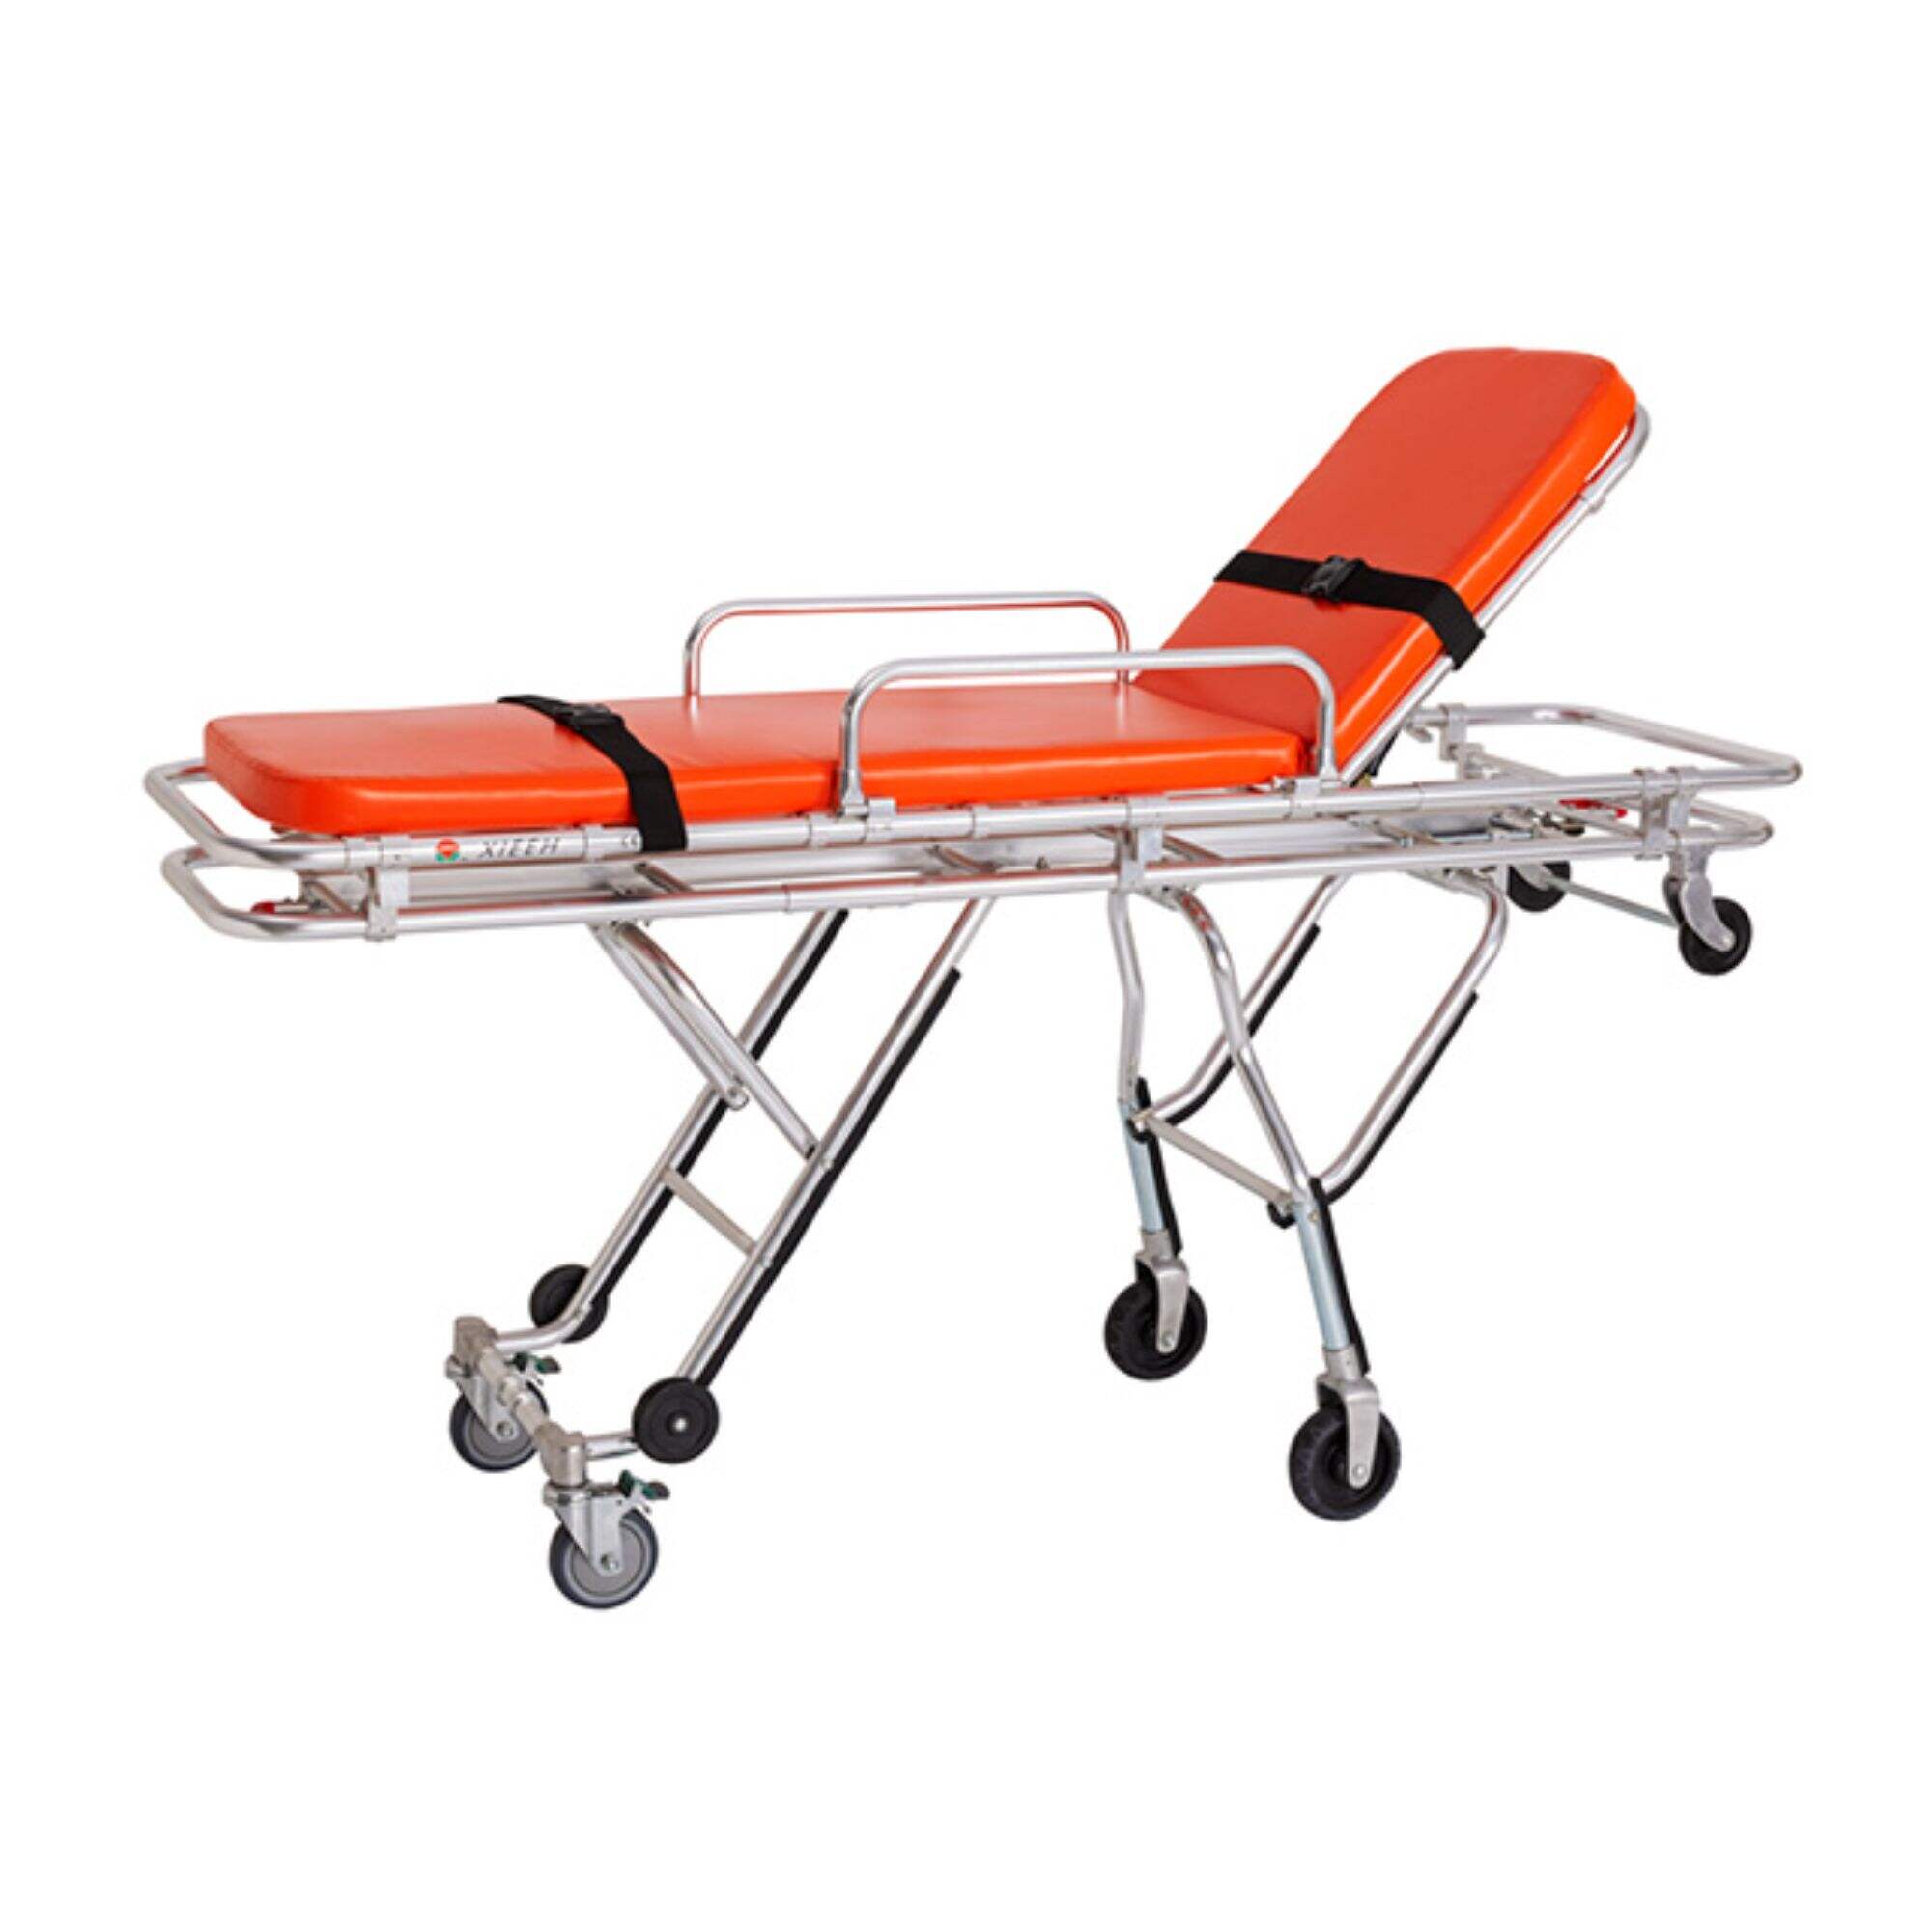 YXH-3D professional emergency ambulance stretcher Hospital Bed 